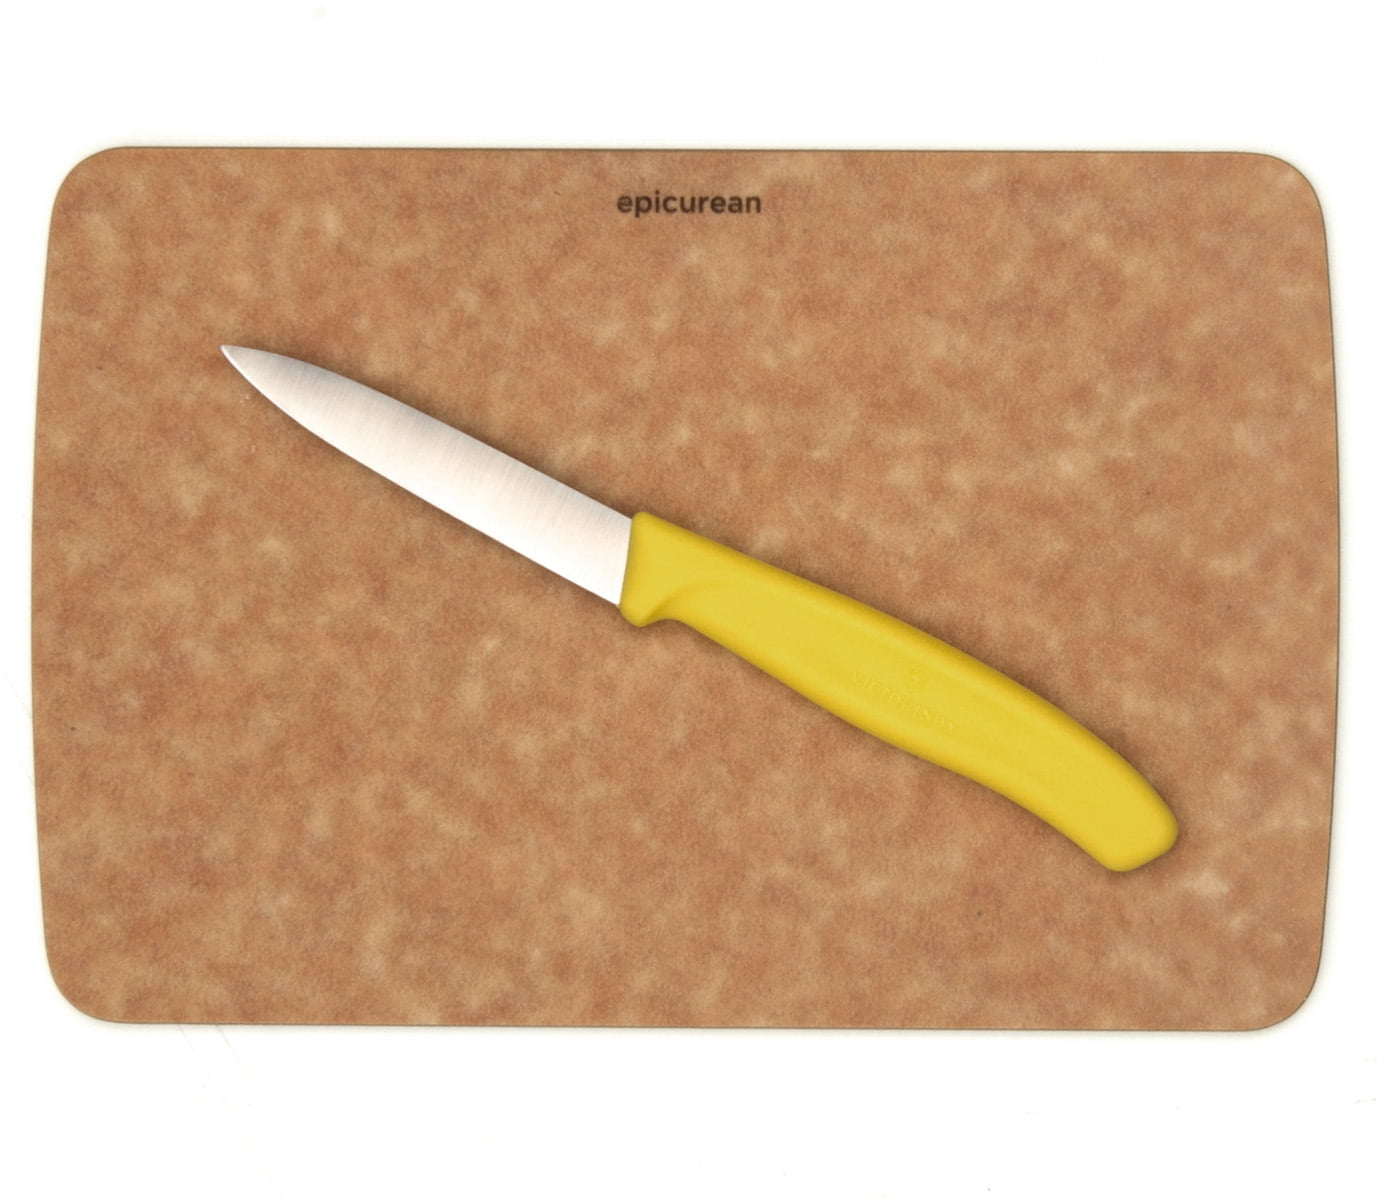 Epicurean 9 x 6 Cutting Board & Paring Knife Combo Pack